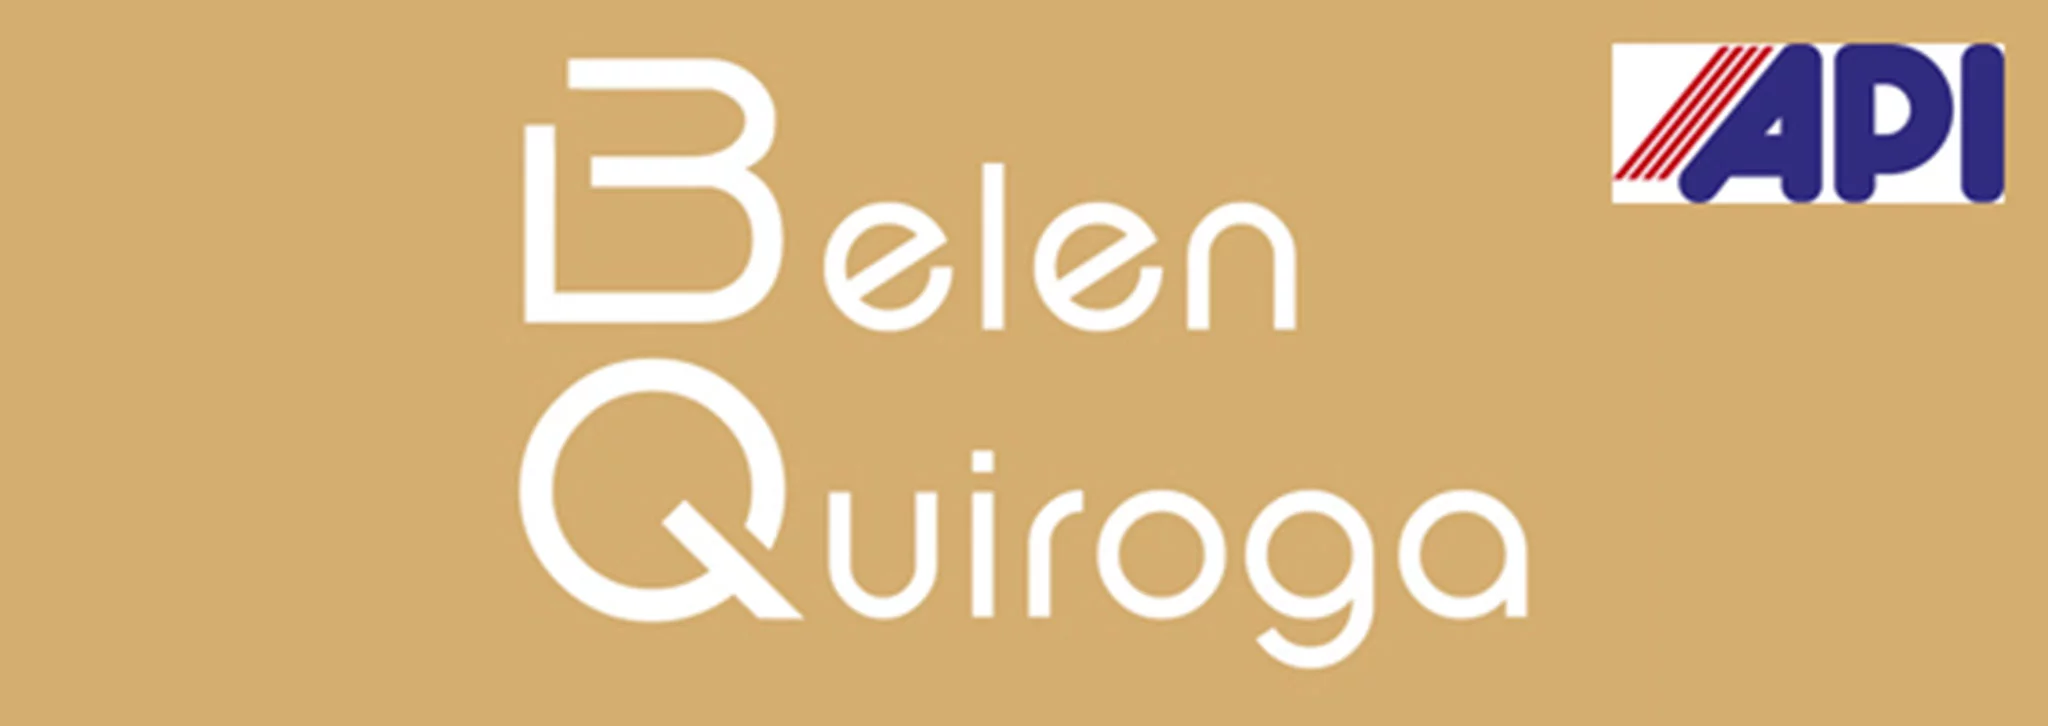 Logotipo Inmobiliaria Belen Quiroga